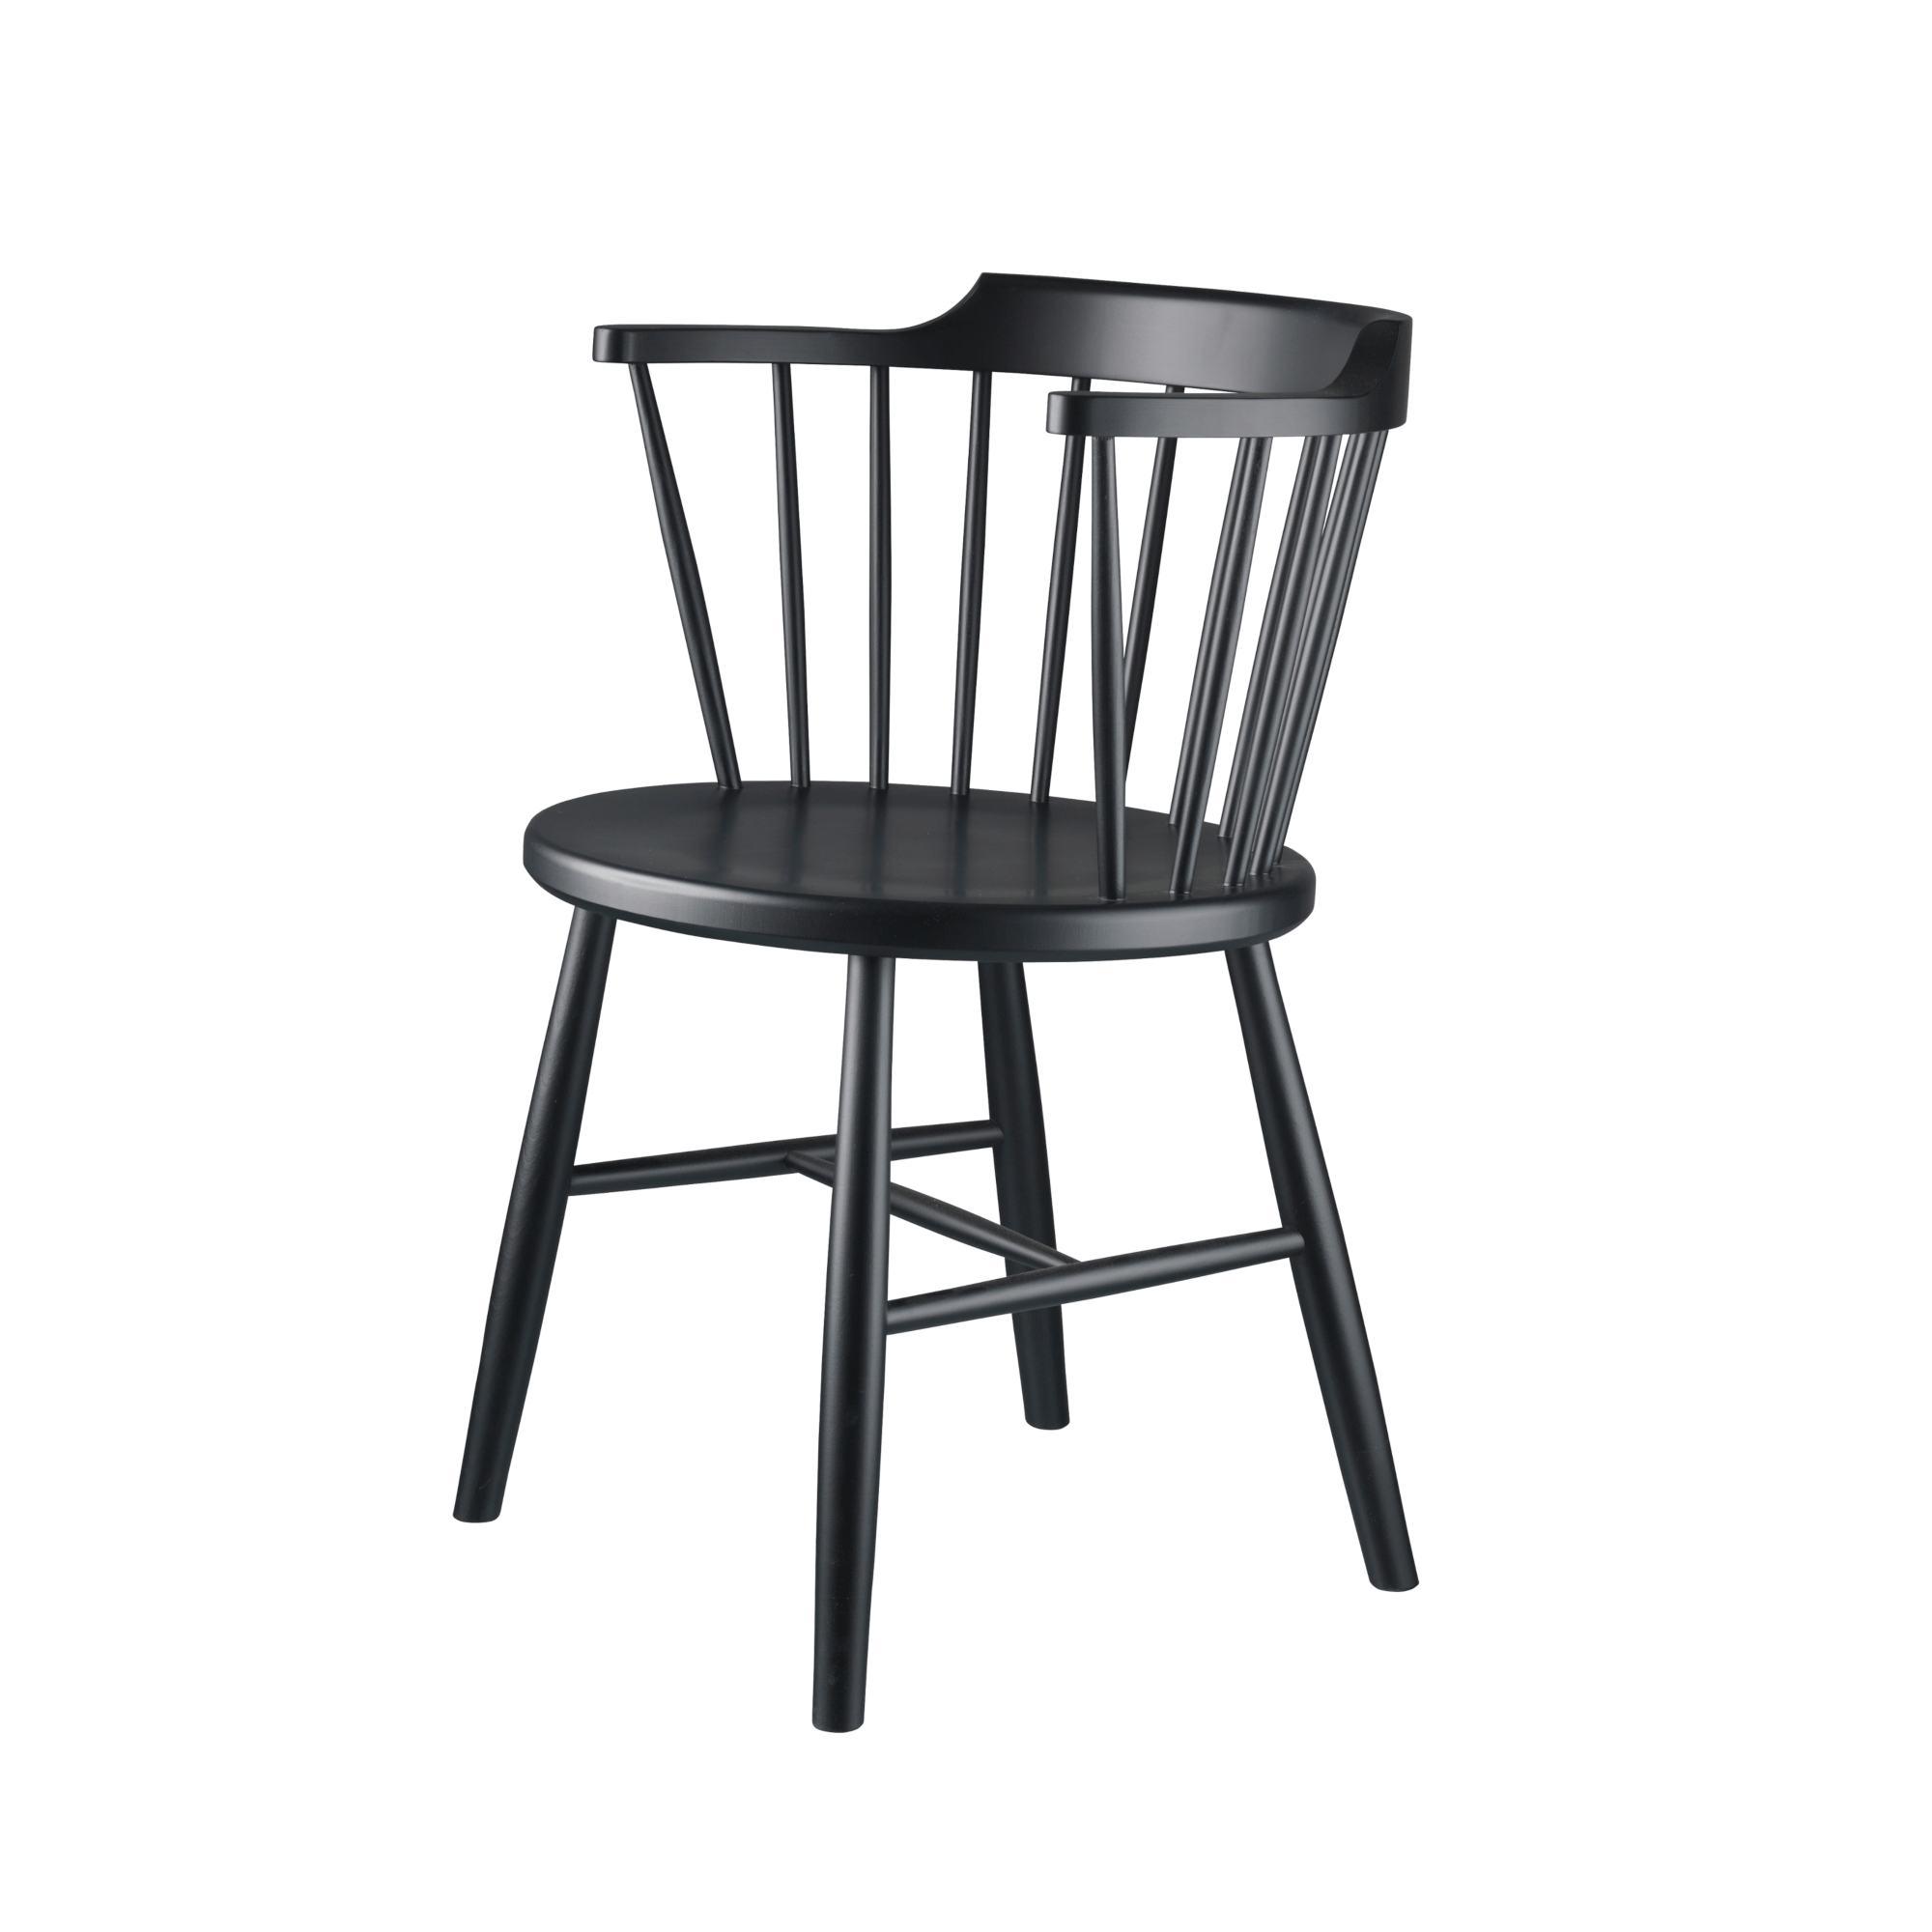 FDB Møbler J18 tuoli musta - Laatukaluste